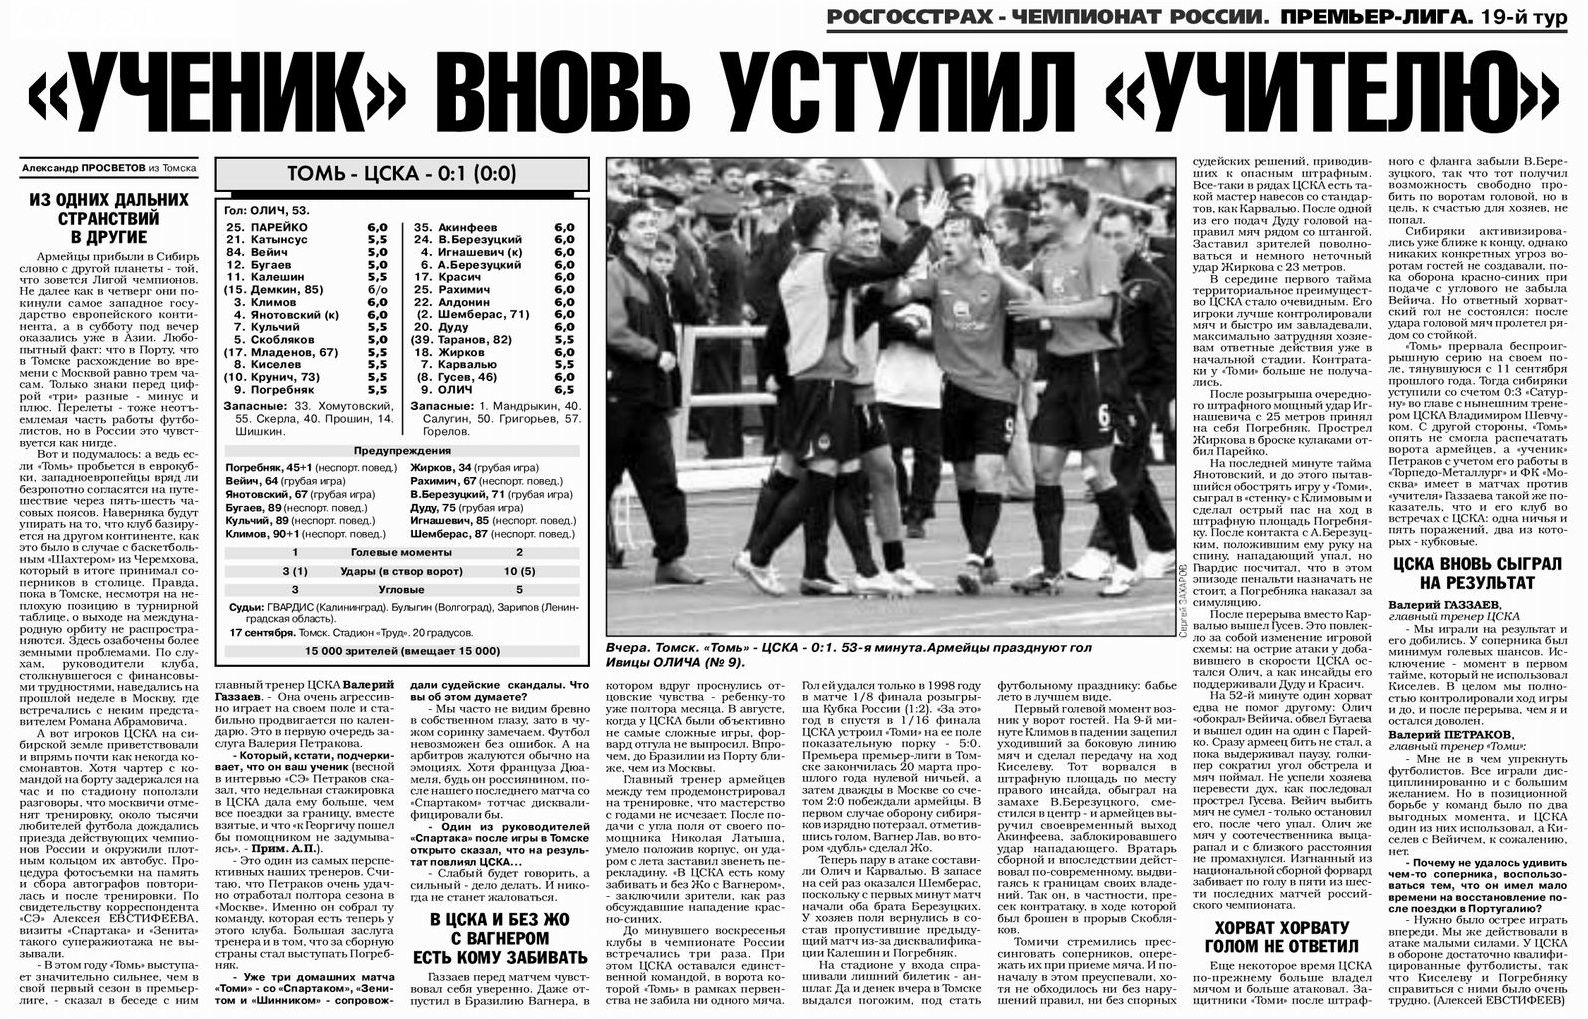 2006-09-17.Tom-CSKA.1